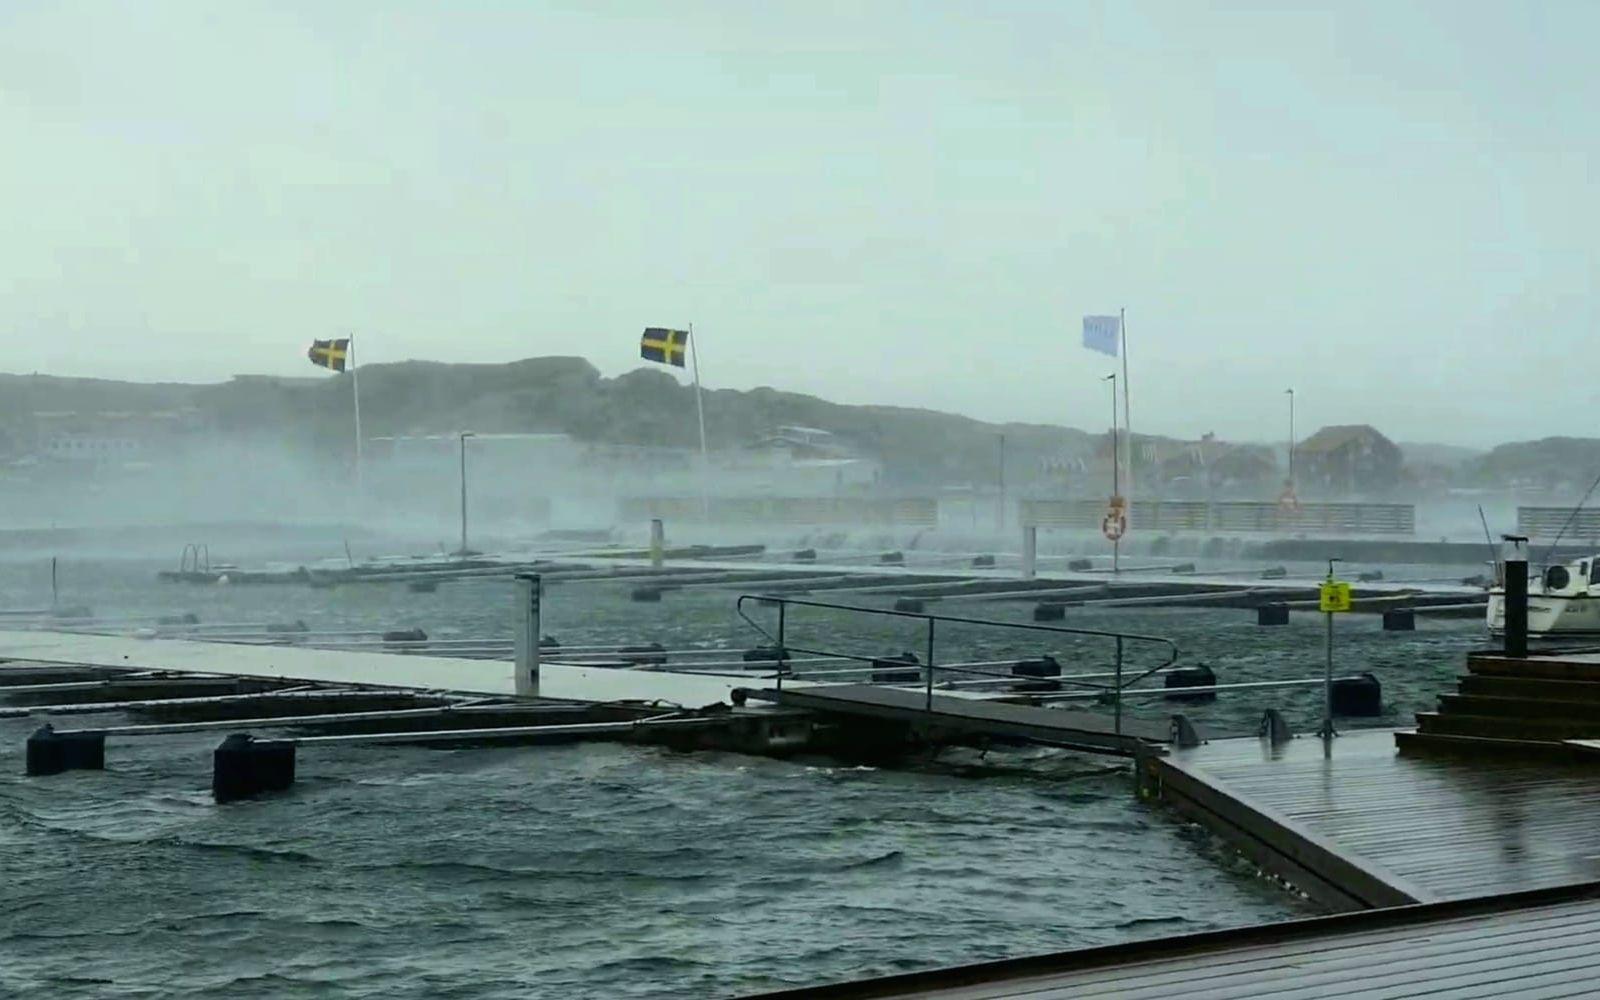 Stormen Louis intog Kajen i Skärhamn.